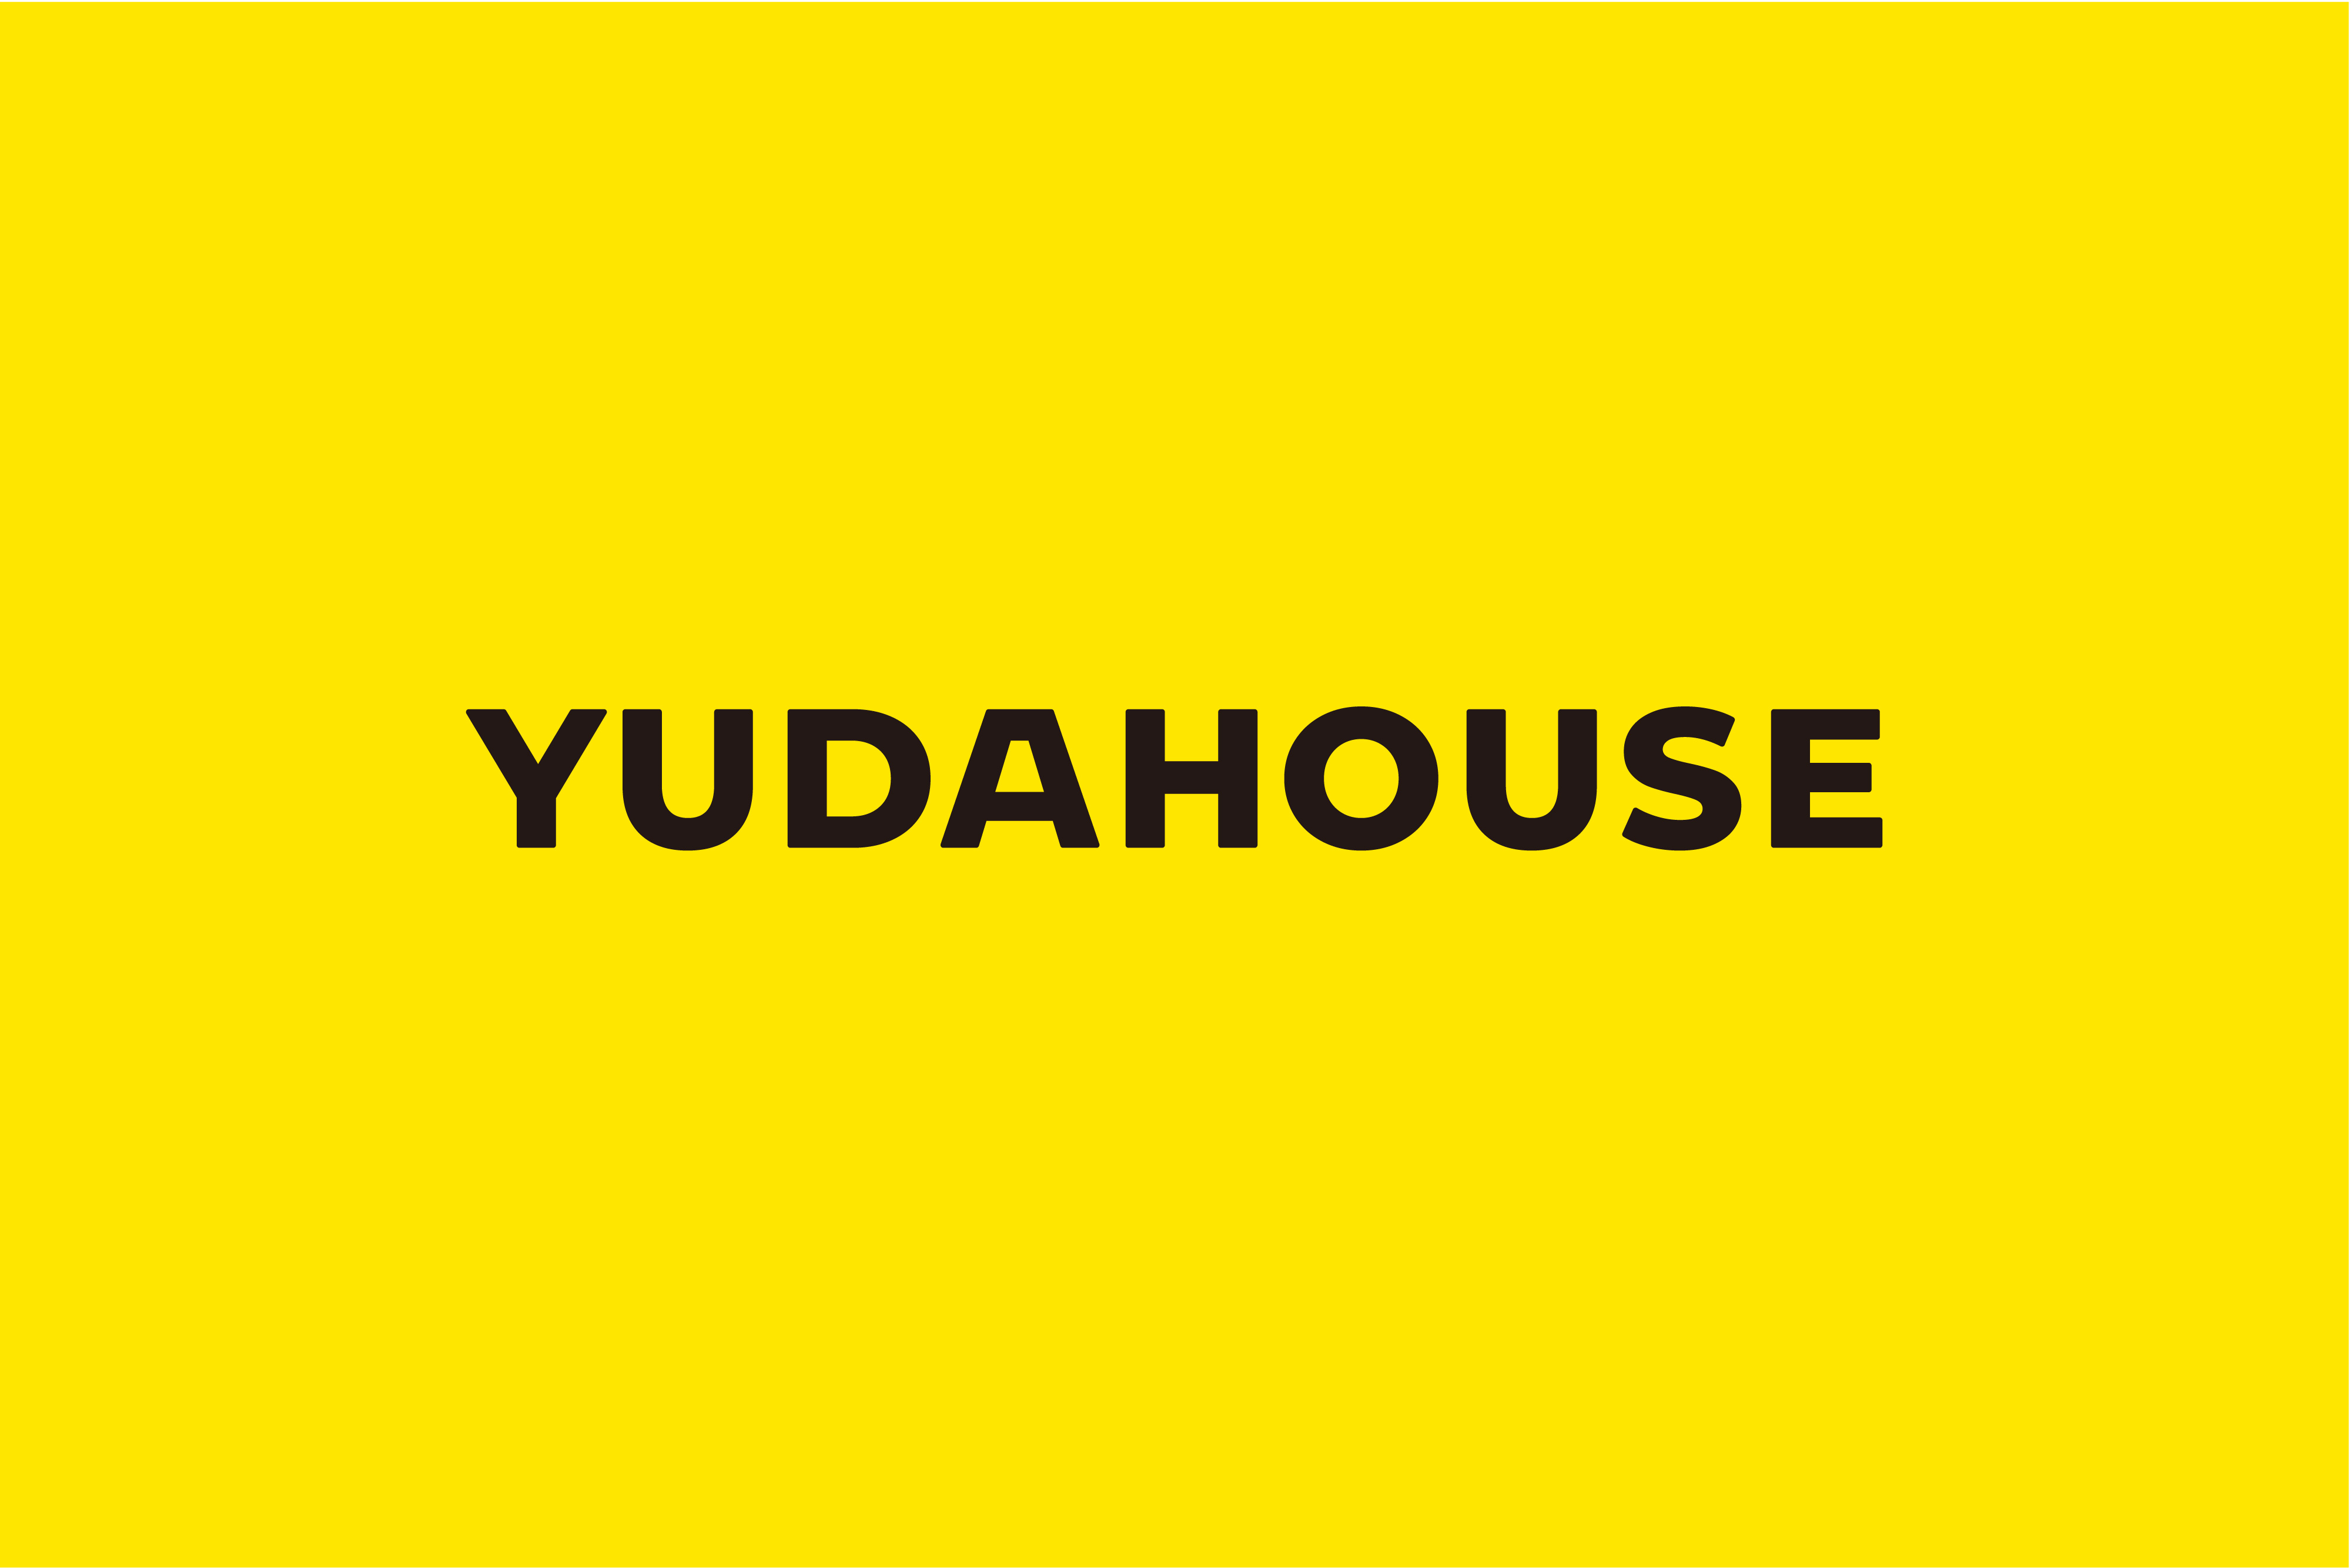 YUDAHOUSE